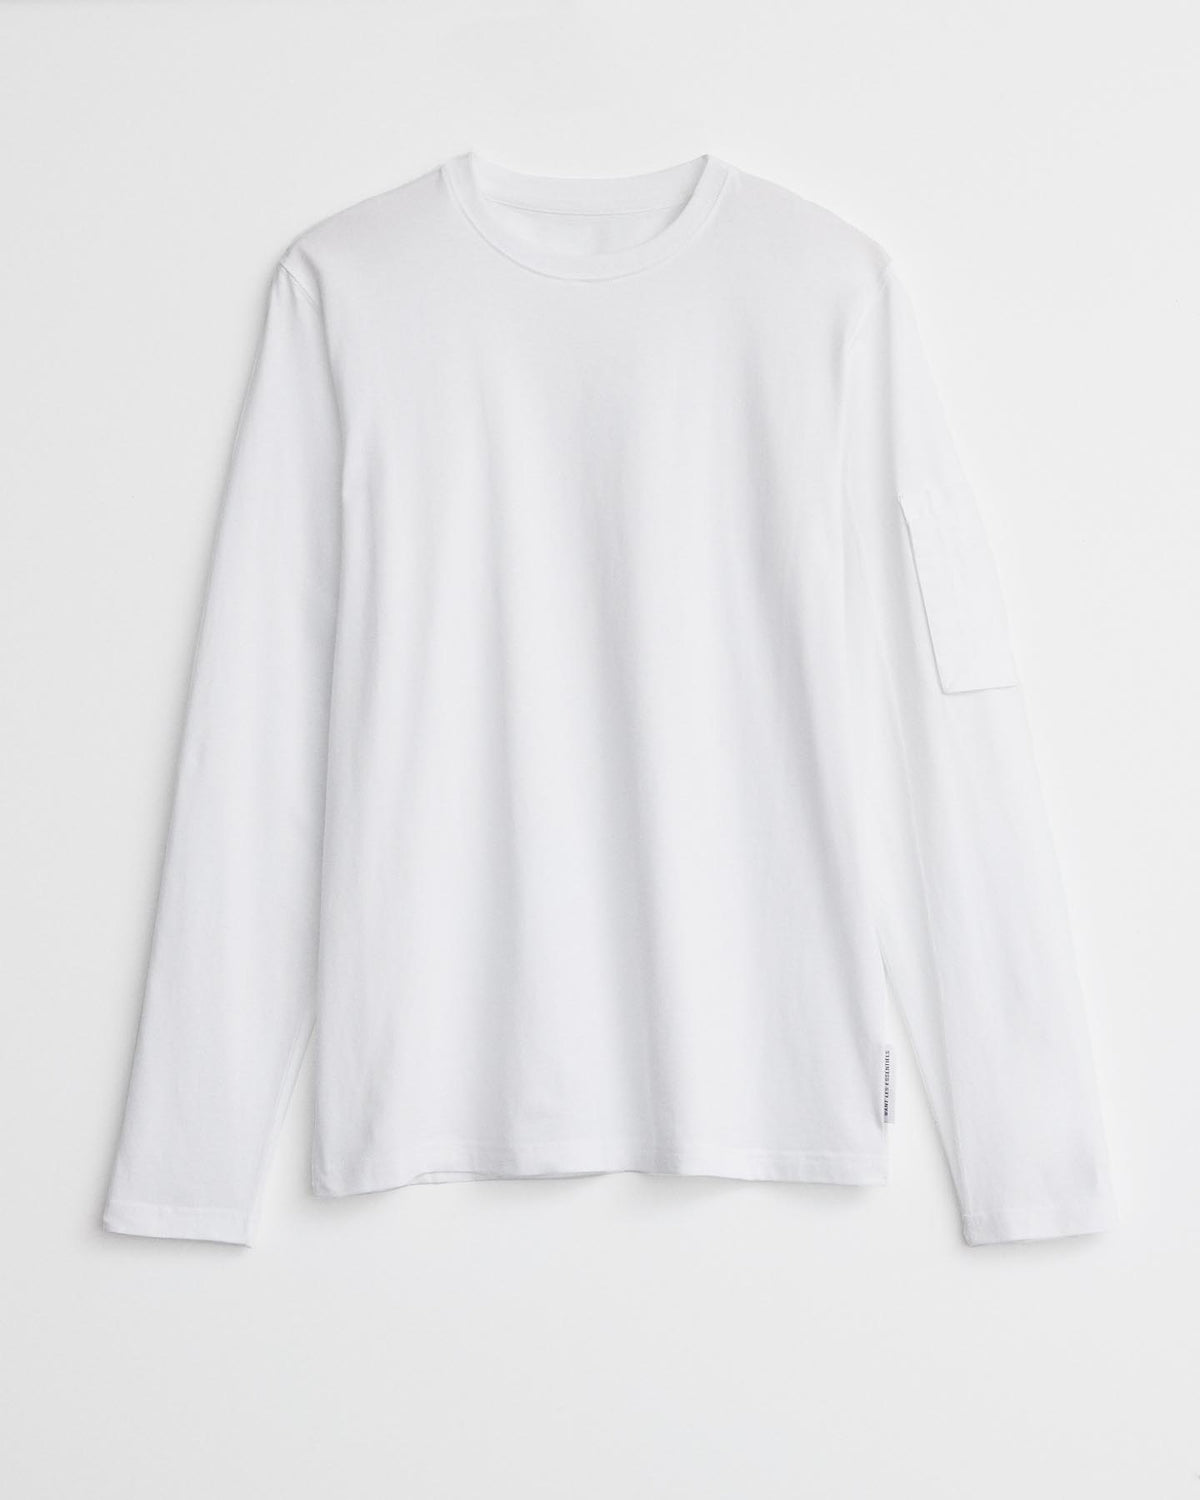 Mendes Unisex Long Sleeve T-Shirt